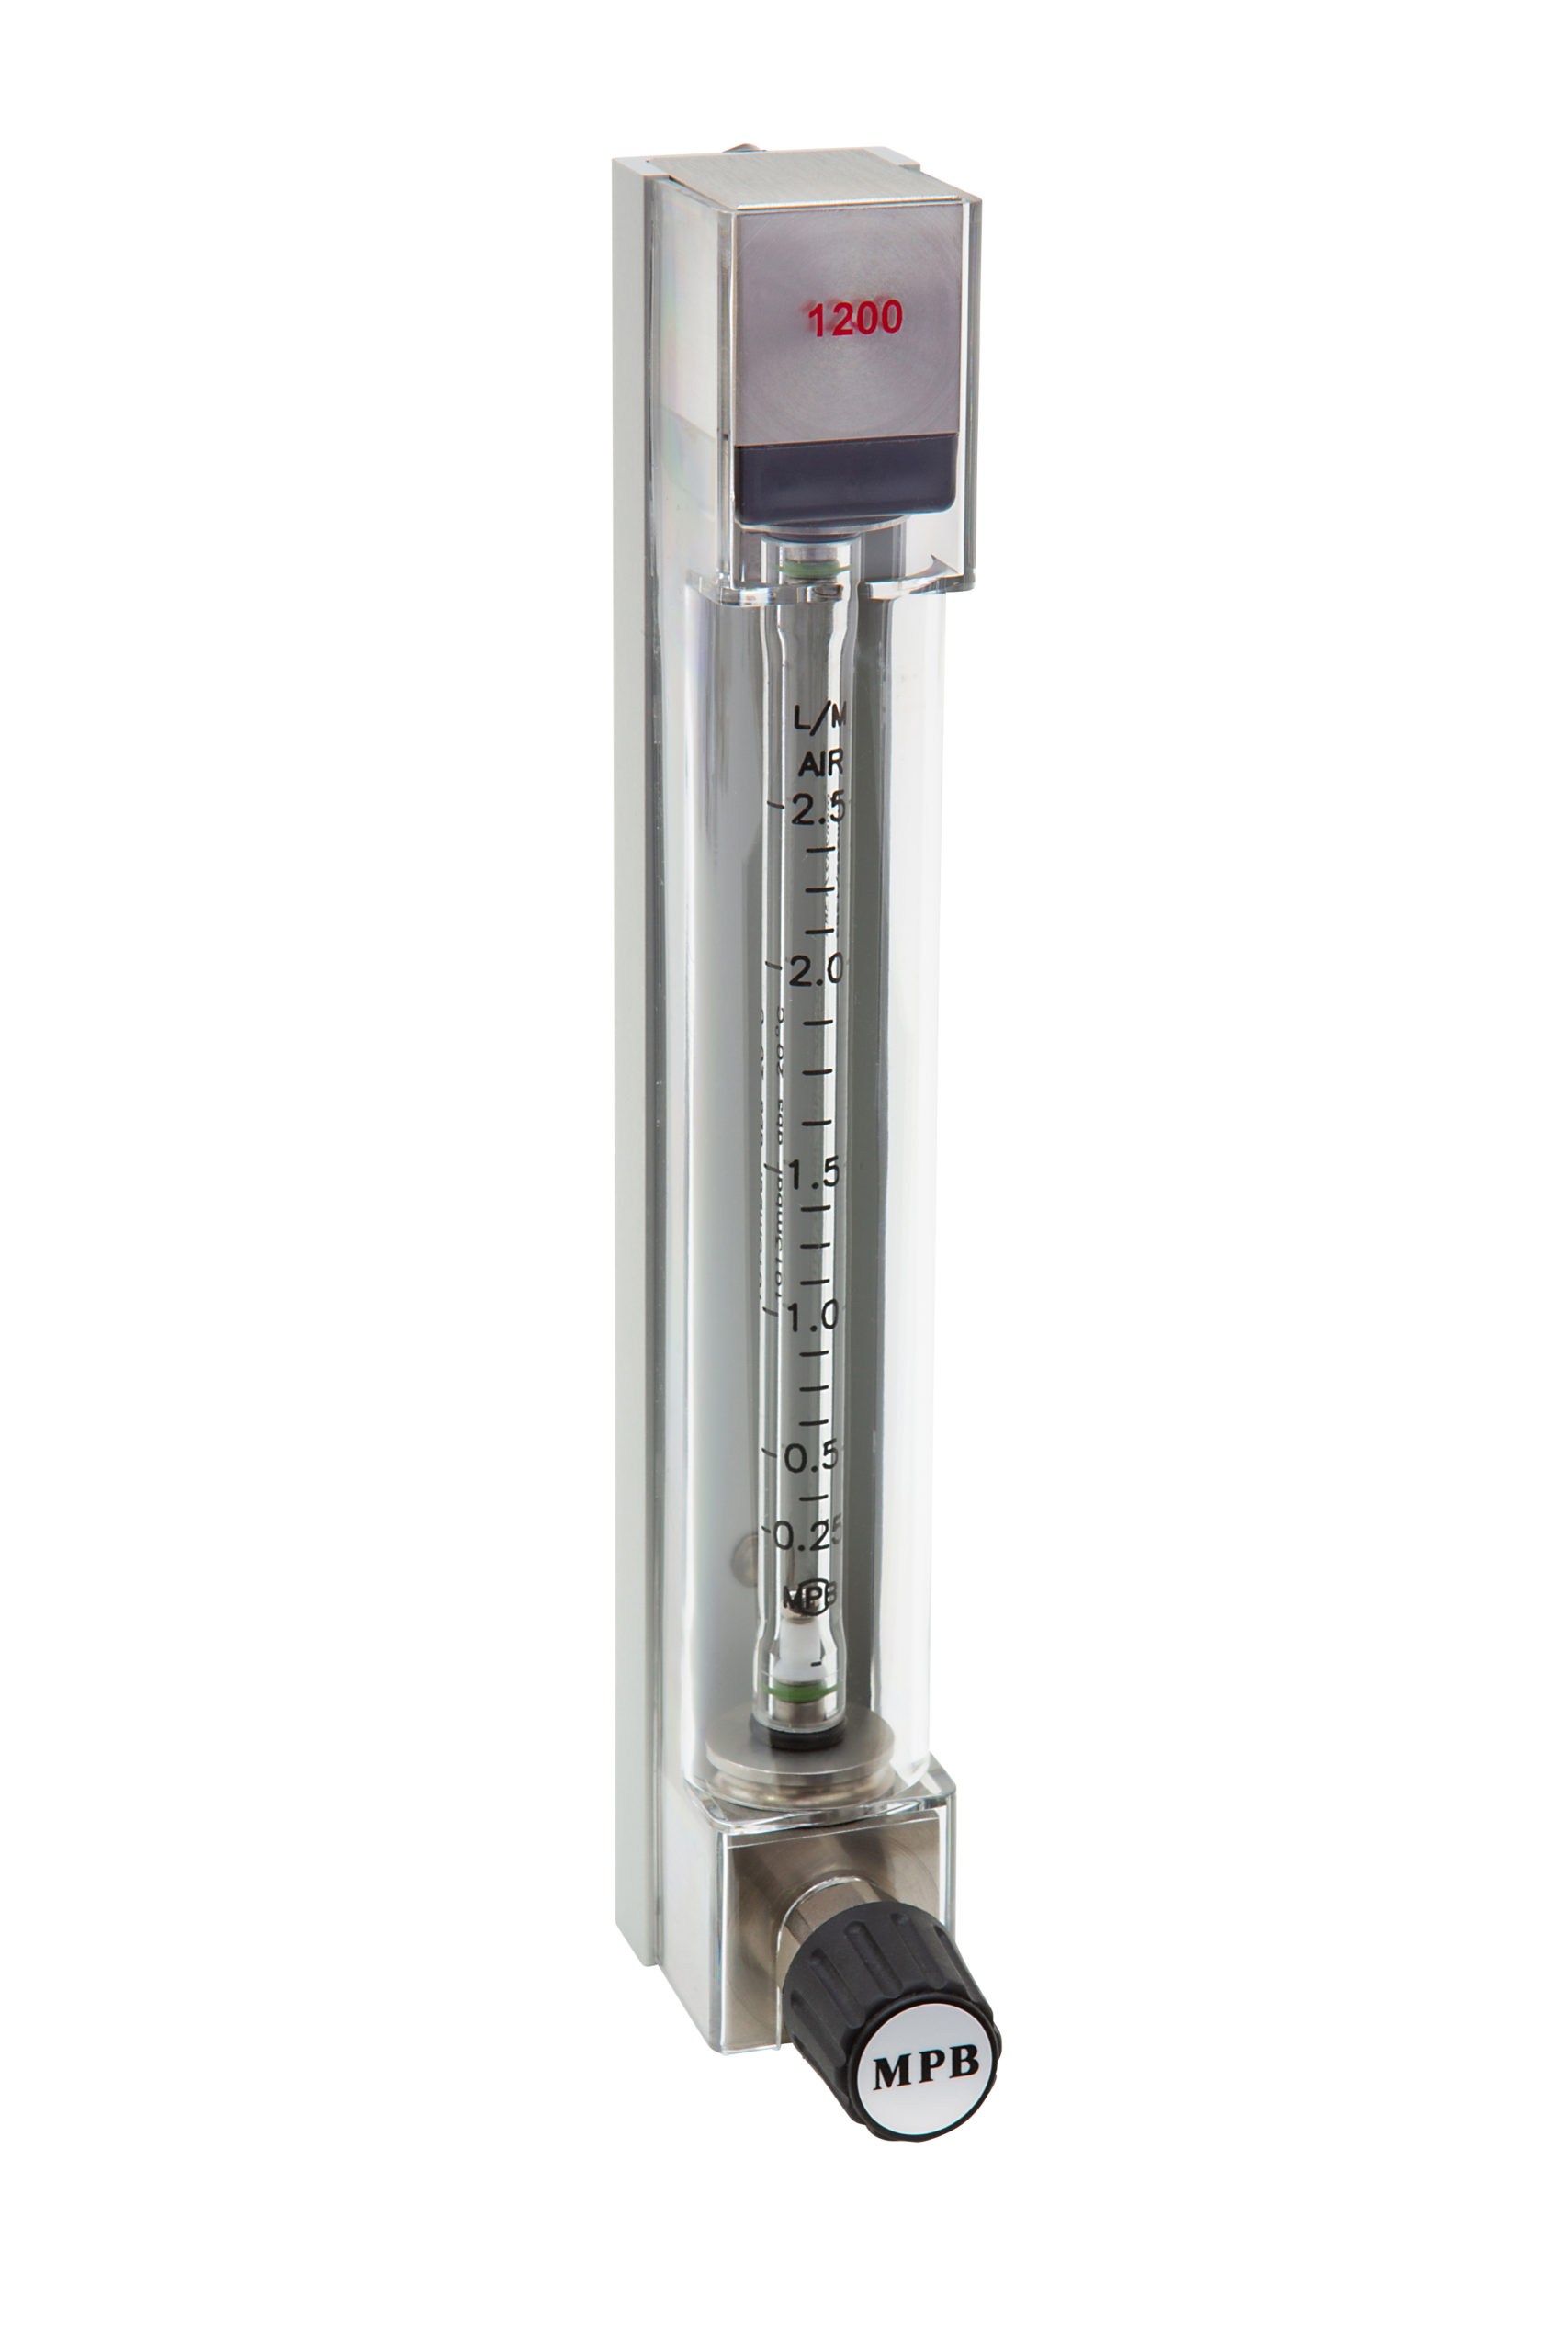 Flowmeter VA MPB Industries Series 1200 Long AIR Variable Area 